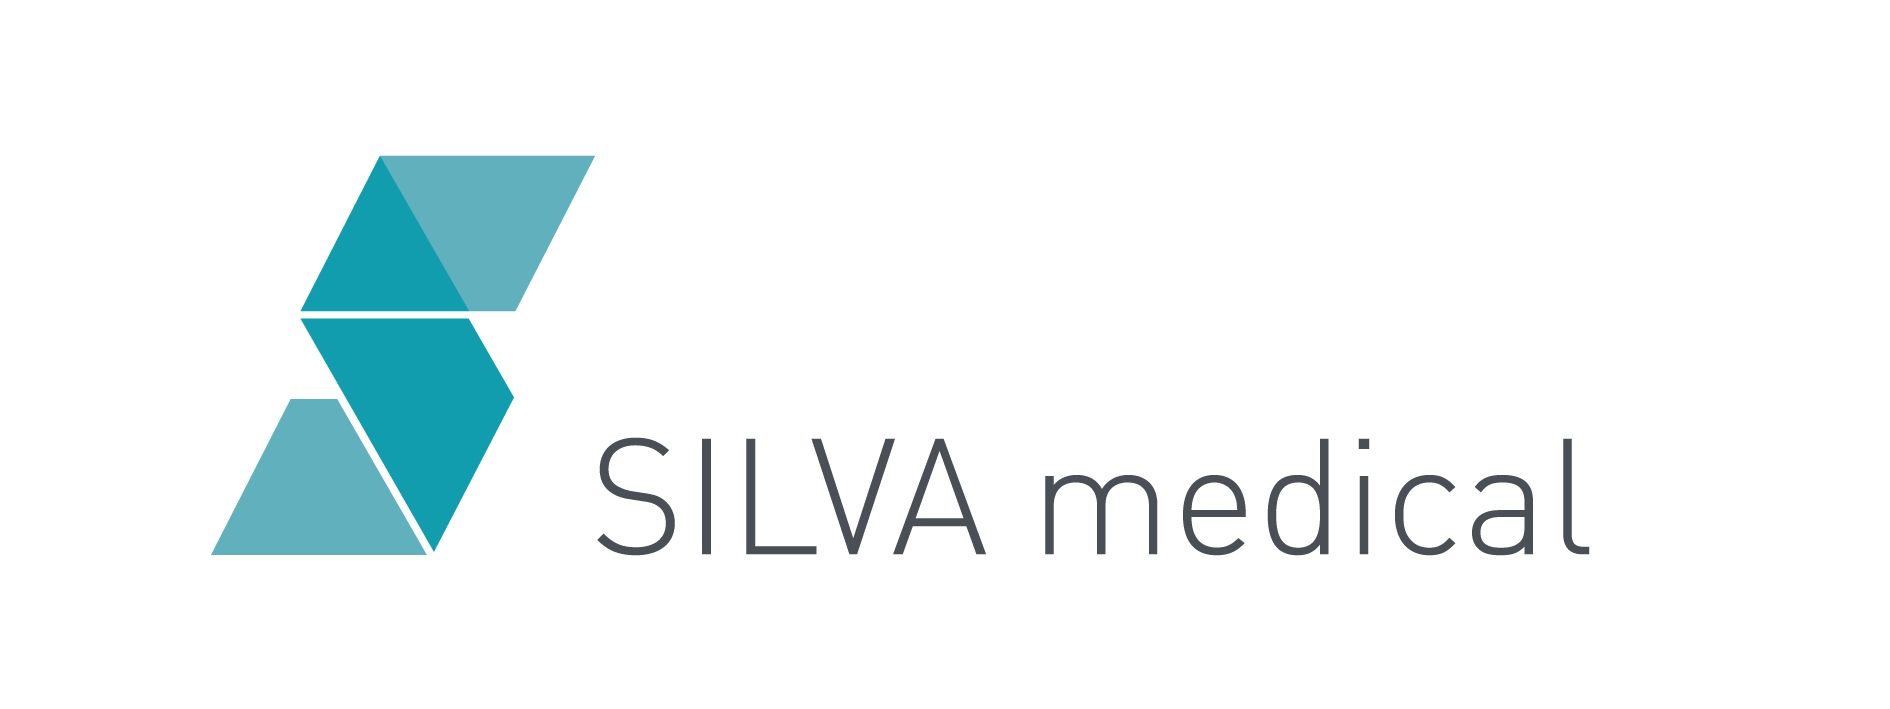 SILVA medical